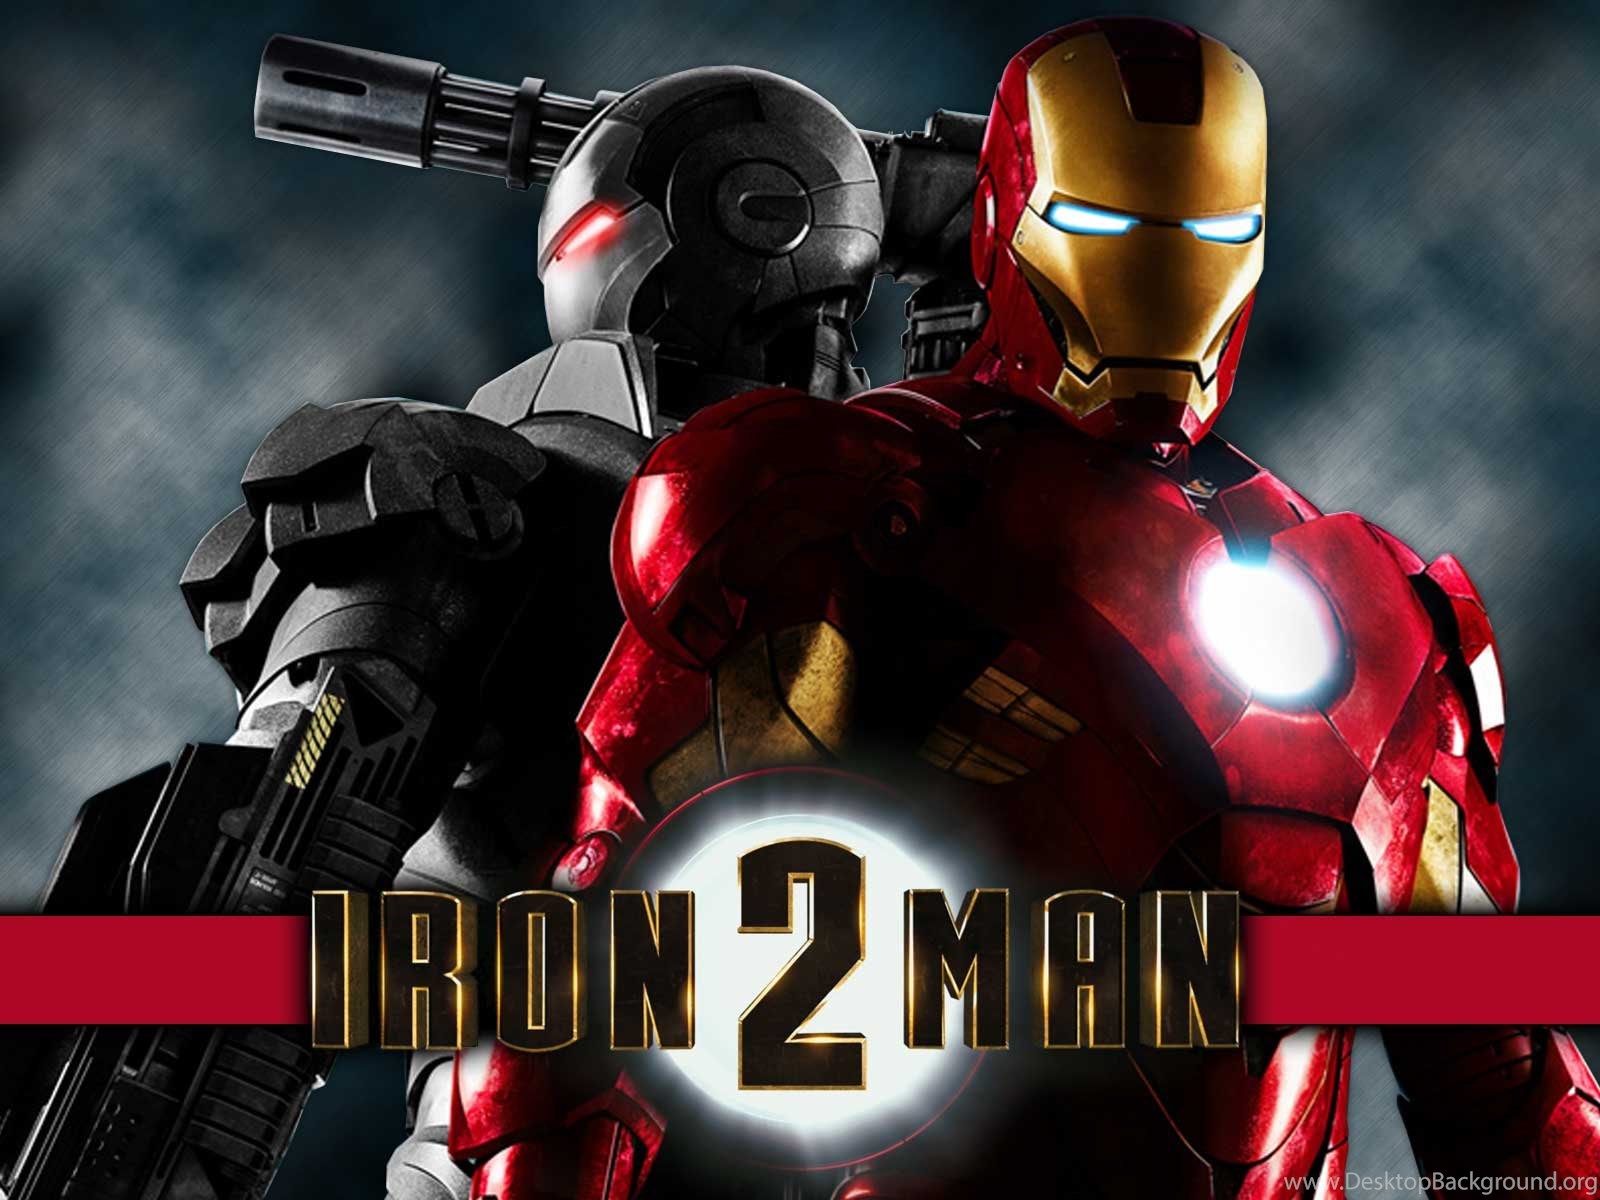 Iron Man 2 Poster Wallpaper Desktop Background